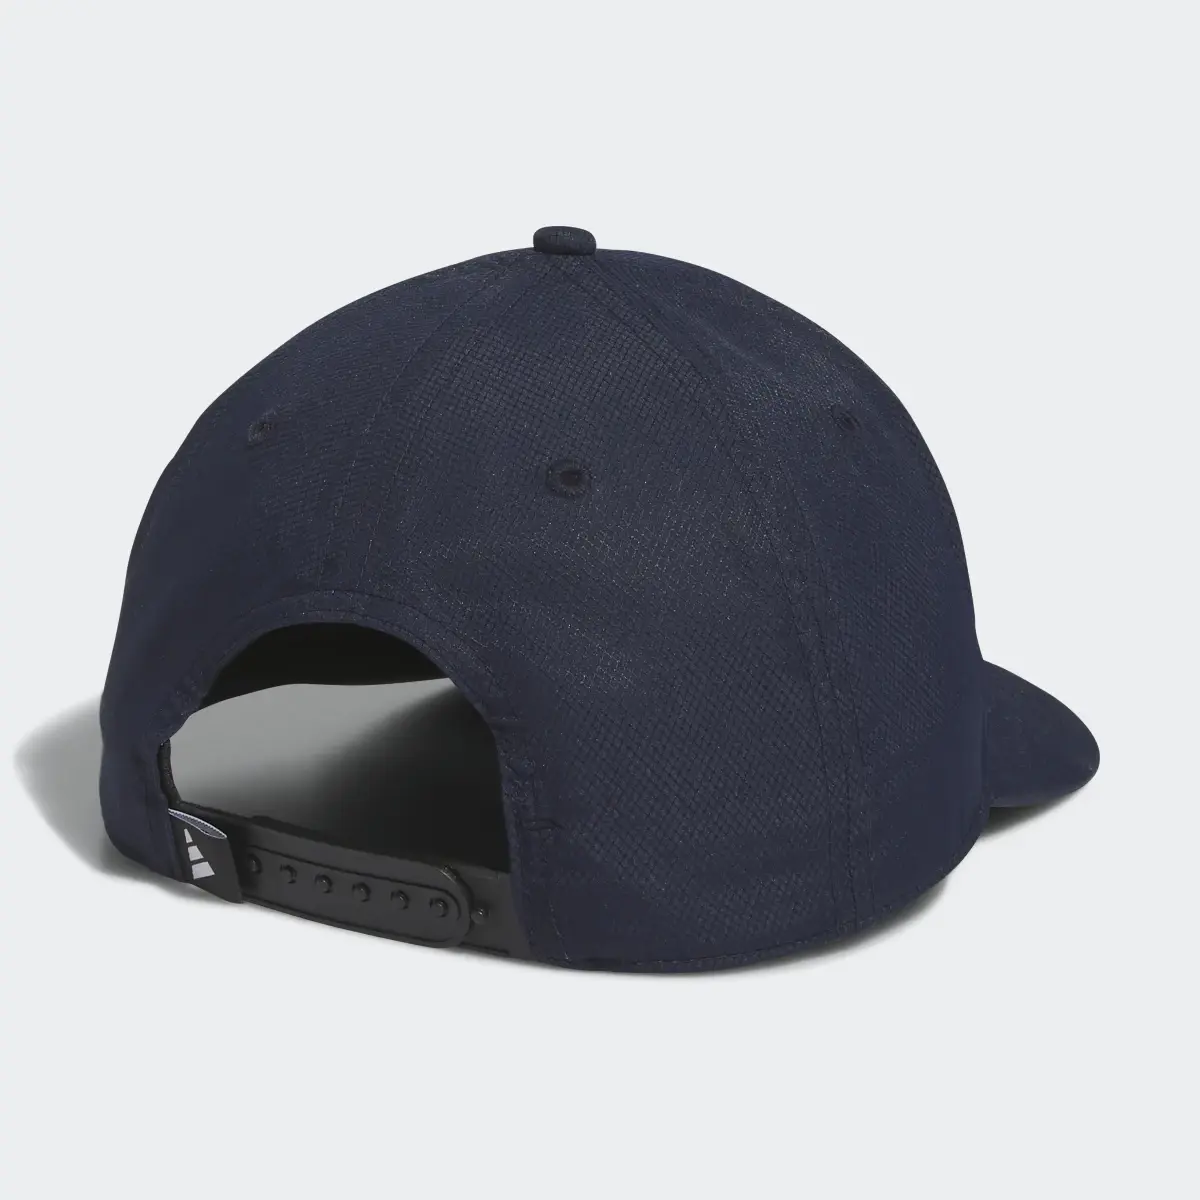 Adidas Tour Snapback Golf Hat. 3